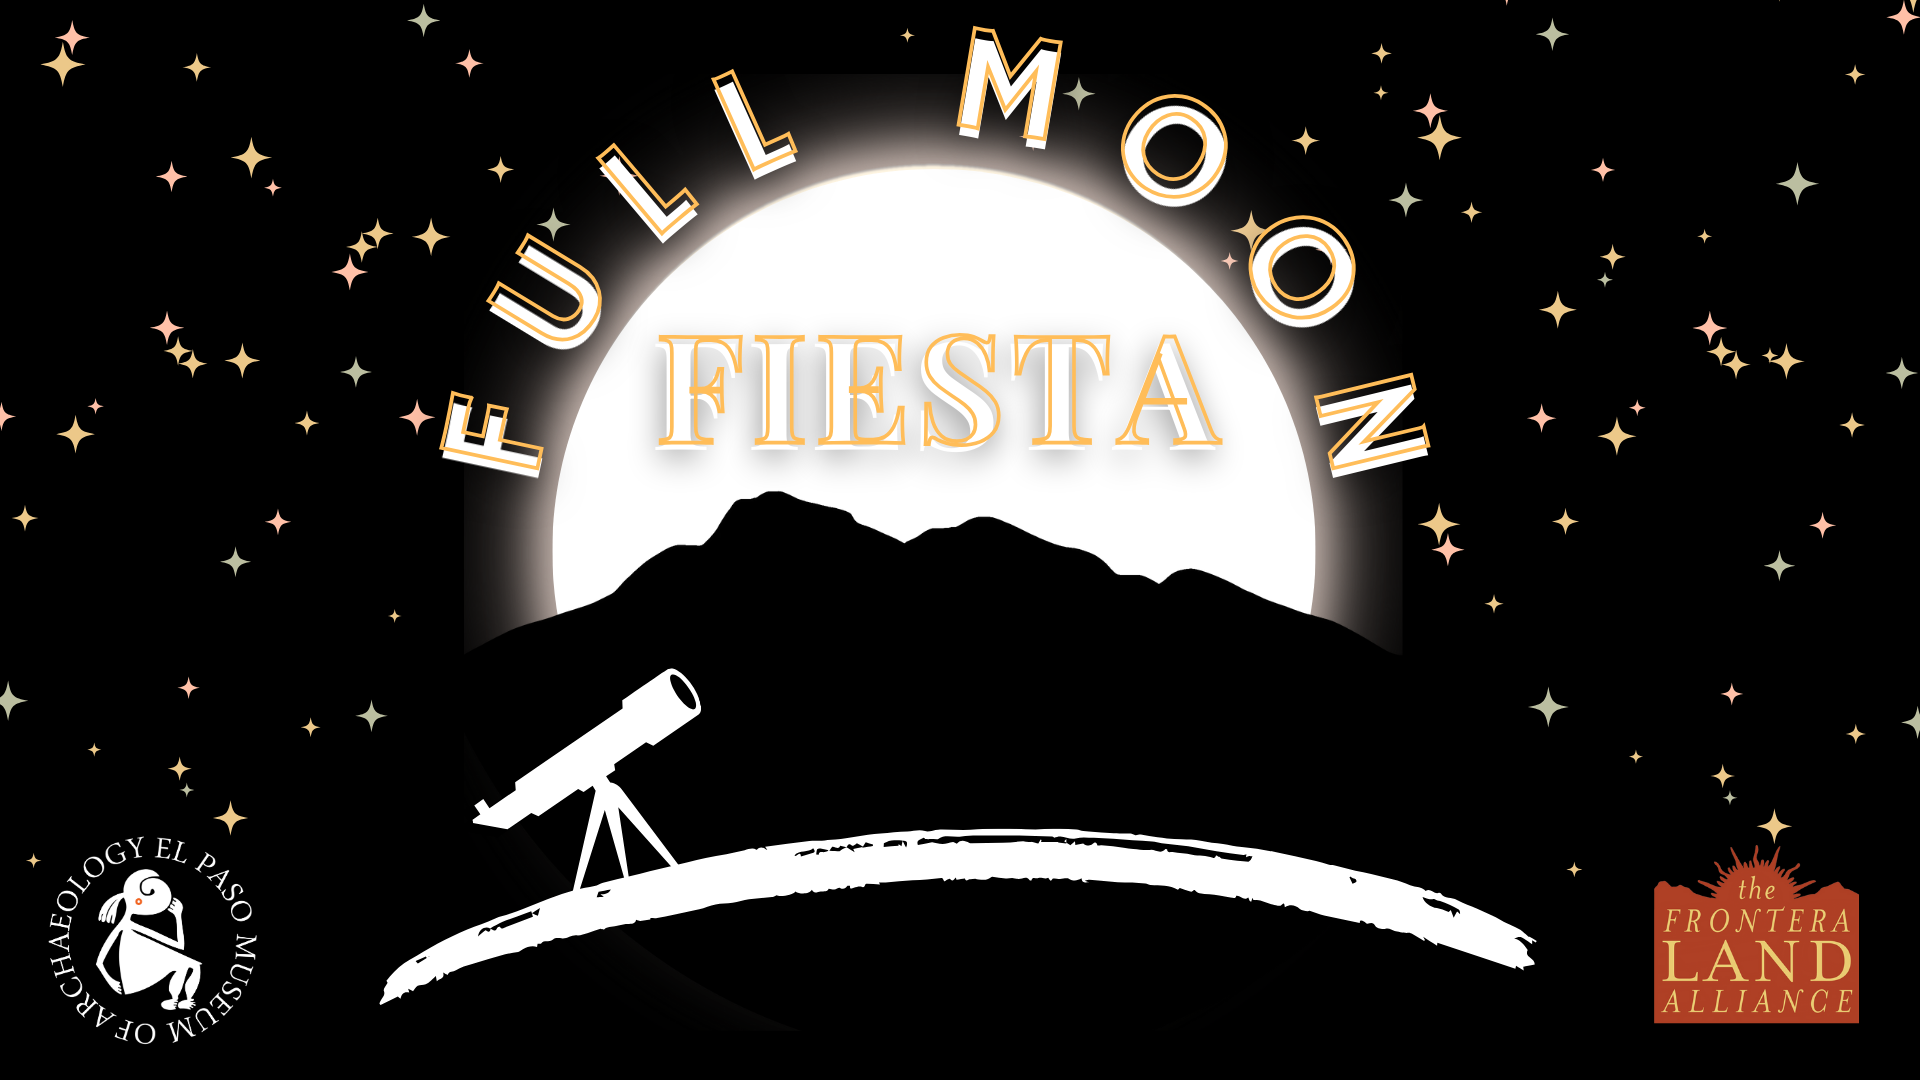 Copy of Full Moon Fiesta Website 24